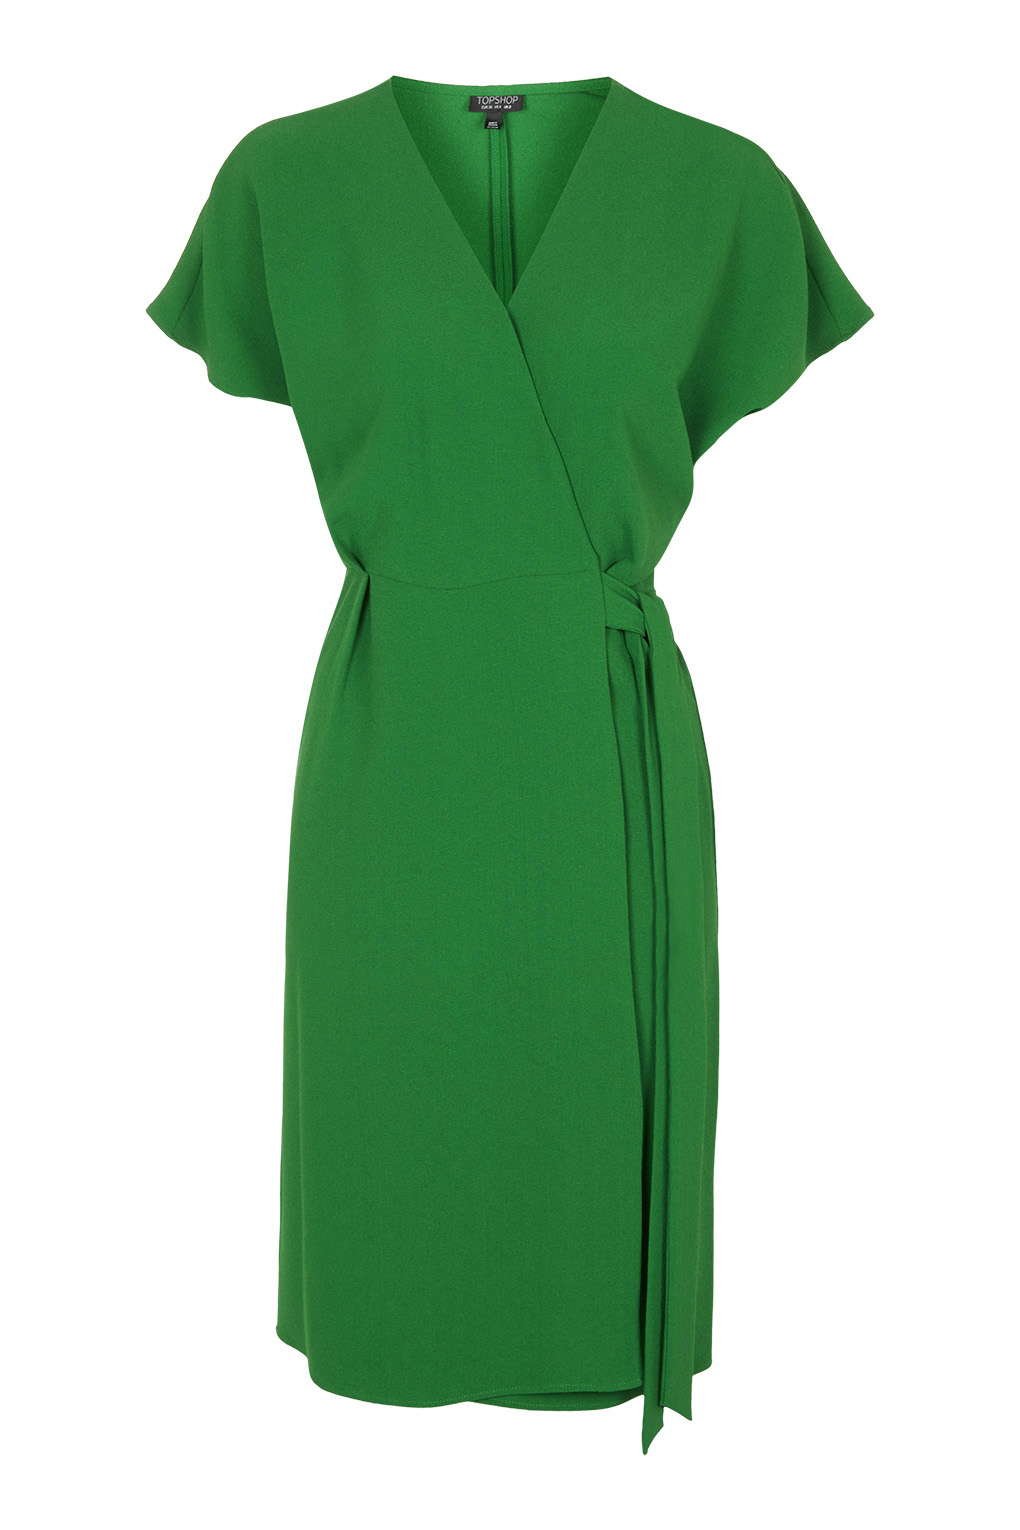 Topshop Wrap Dress in Green  Lyst